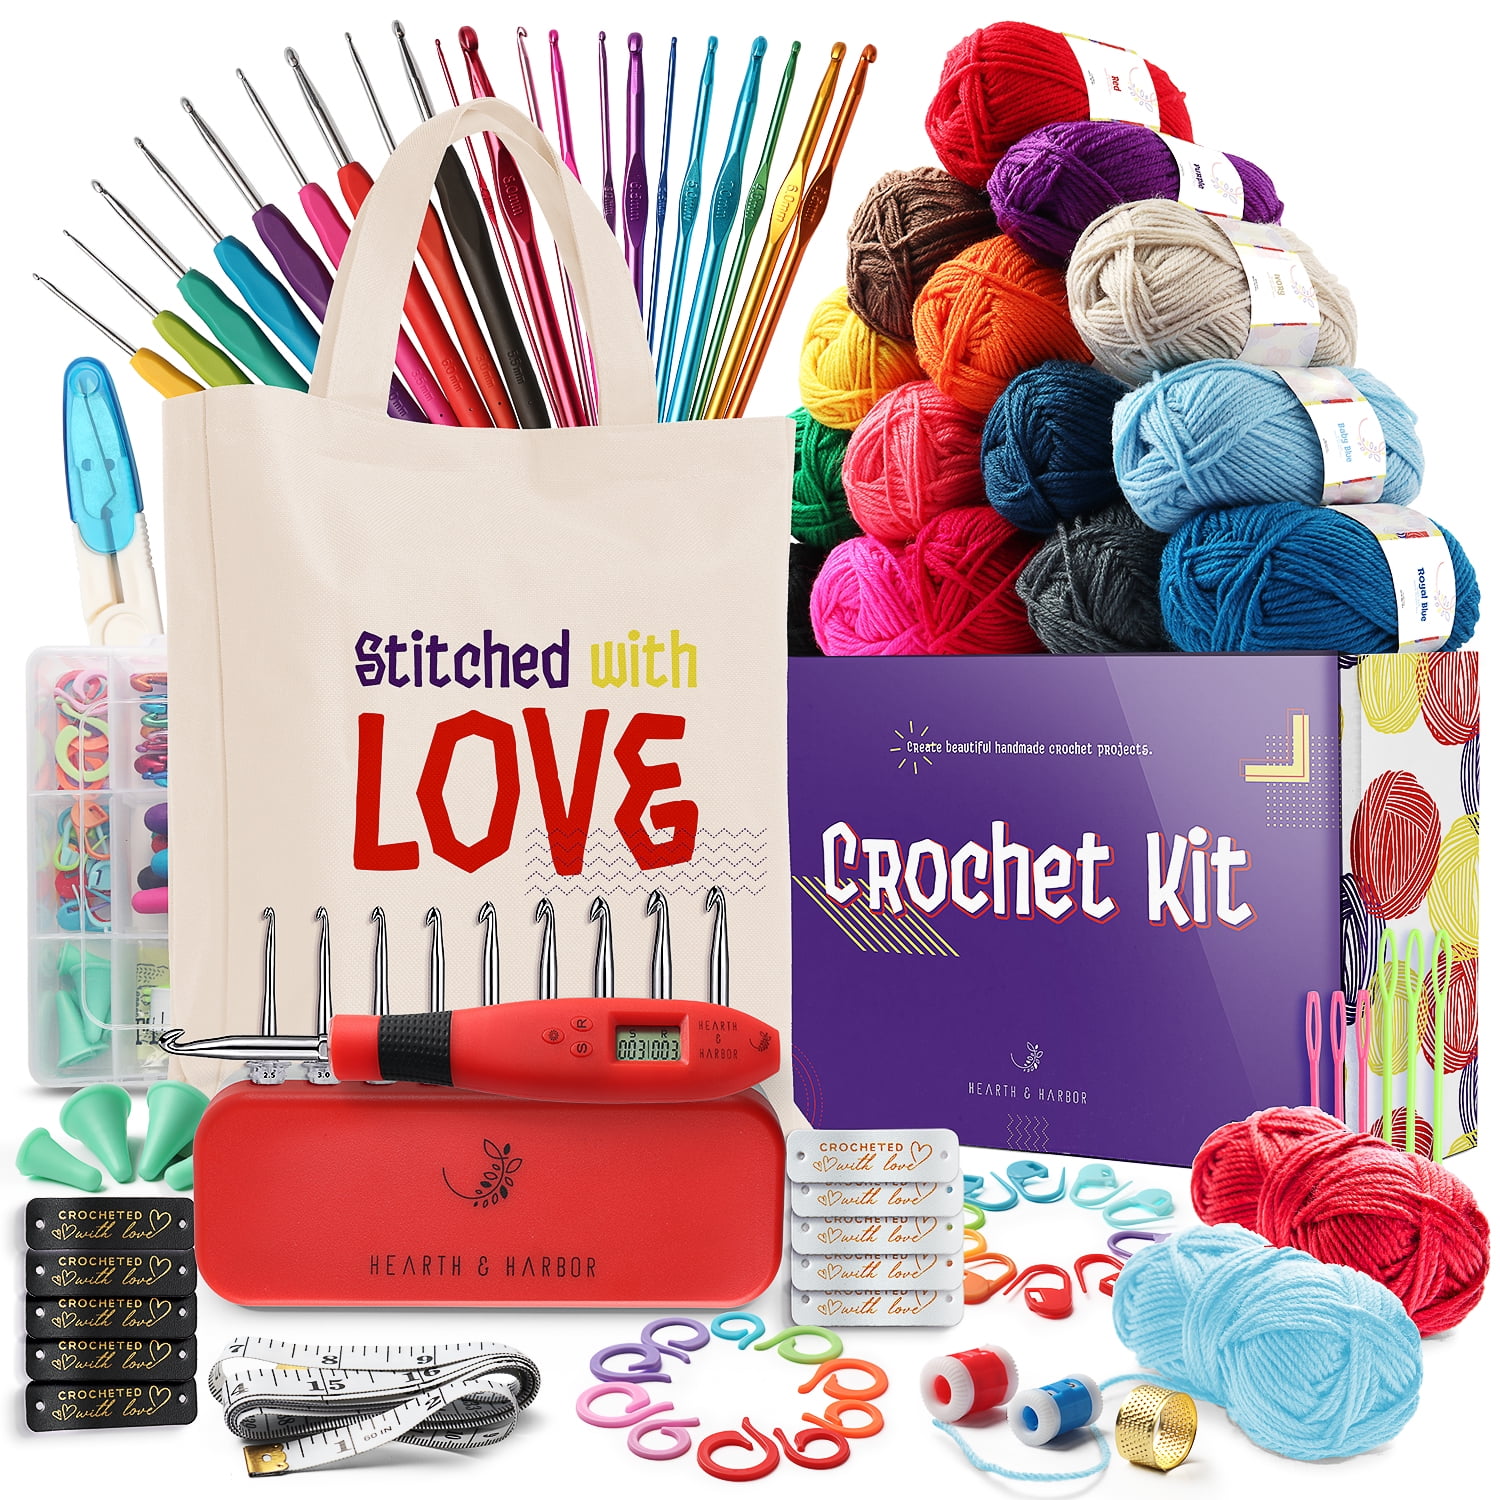 Hearth & Harbor Crochet Set Kit with Yarn and Crochet Hook Set (96pc), Size: Crochet Set + Crochet Counter